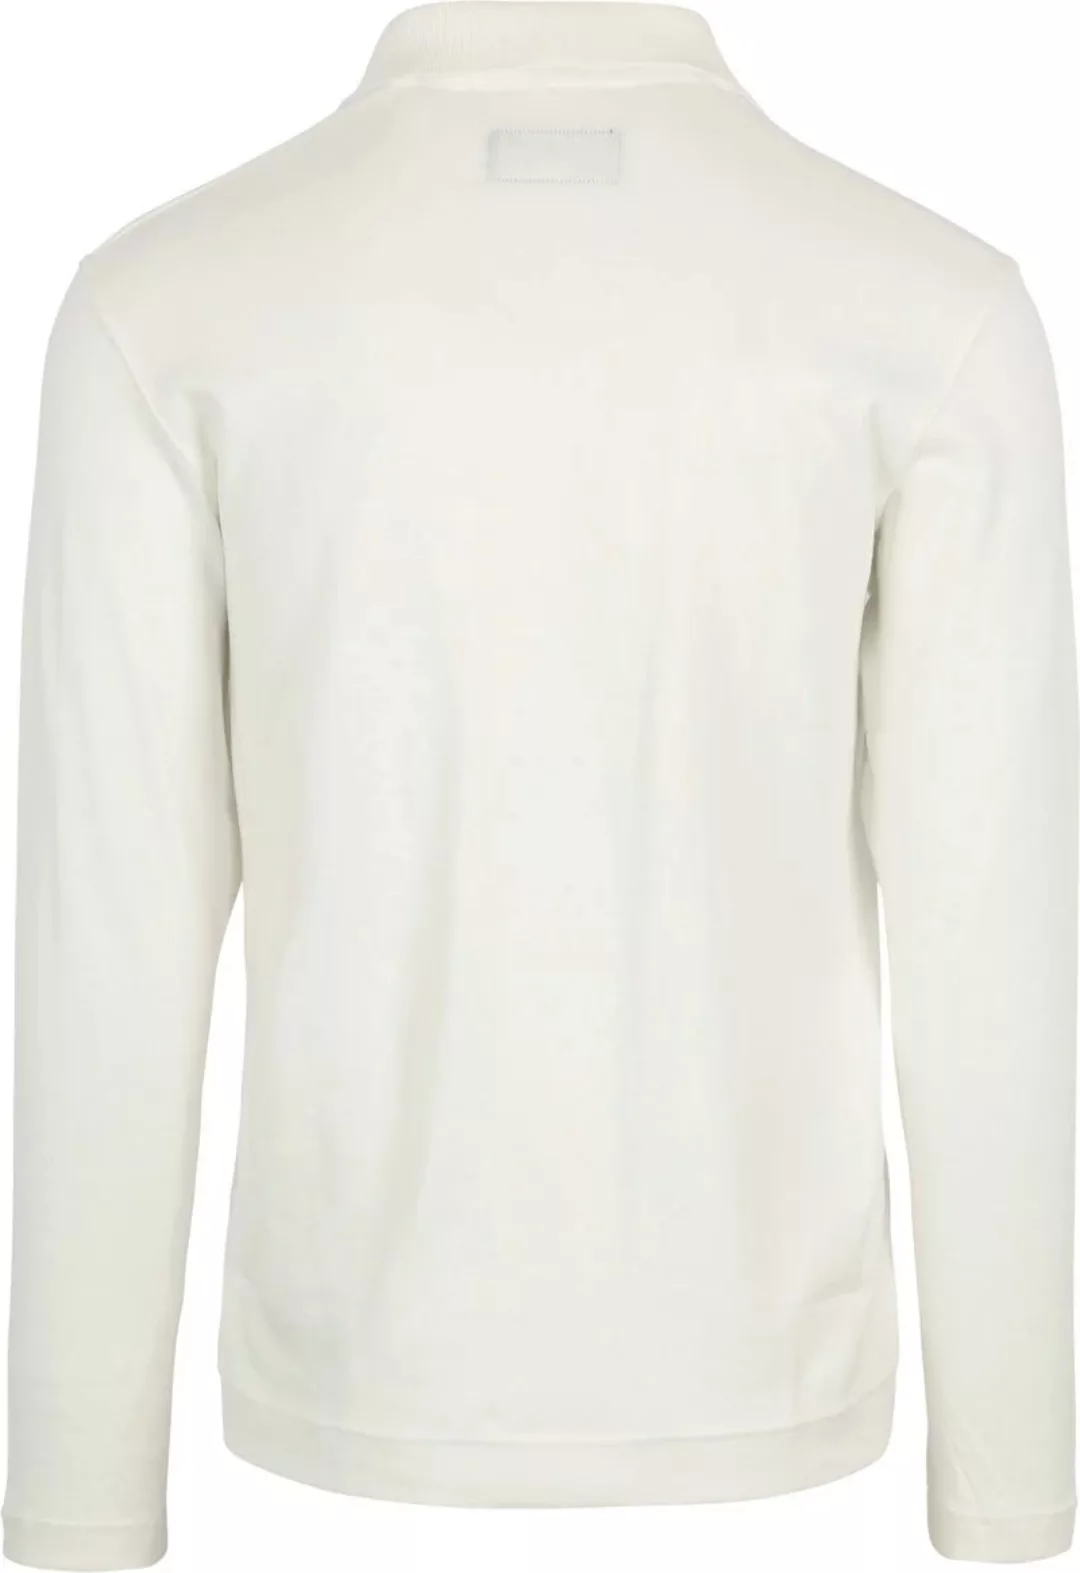 Marc O'Polo Knitted Polohemd Weiß - Größe XXL günstig online kaufen